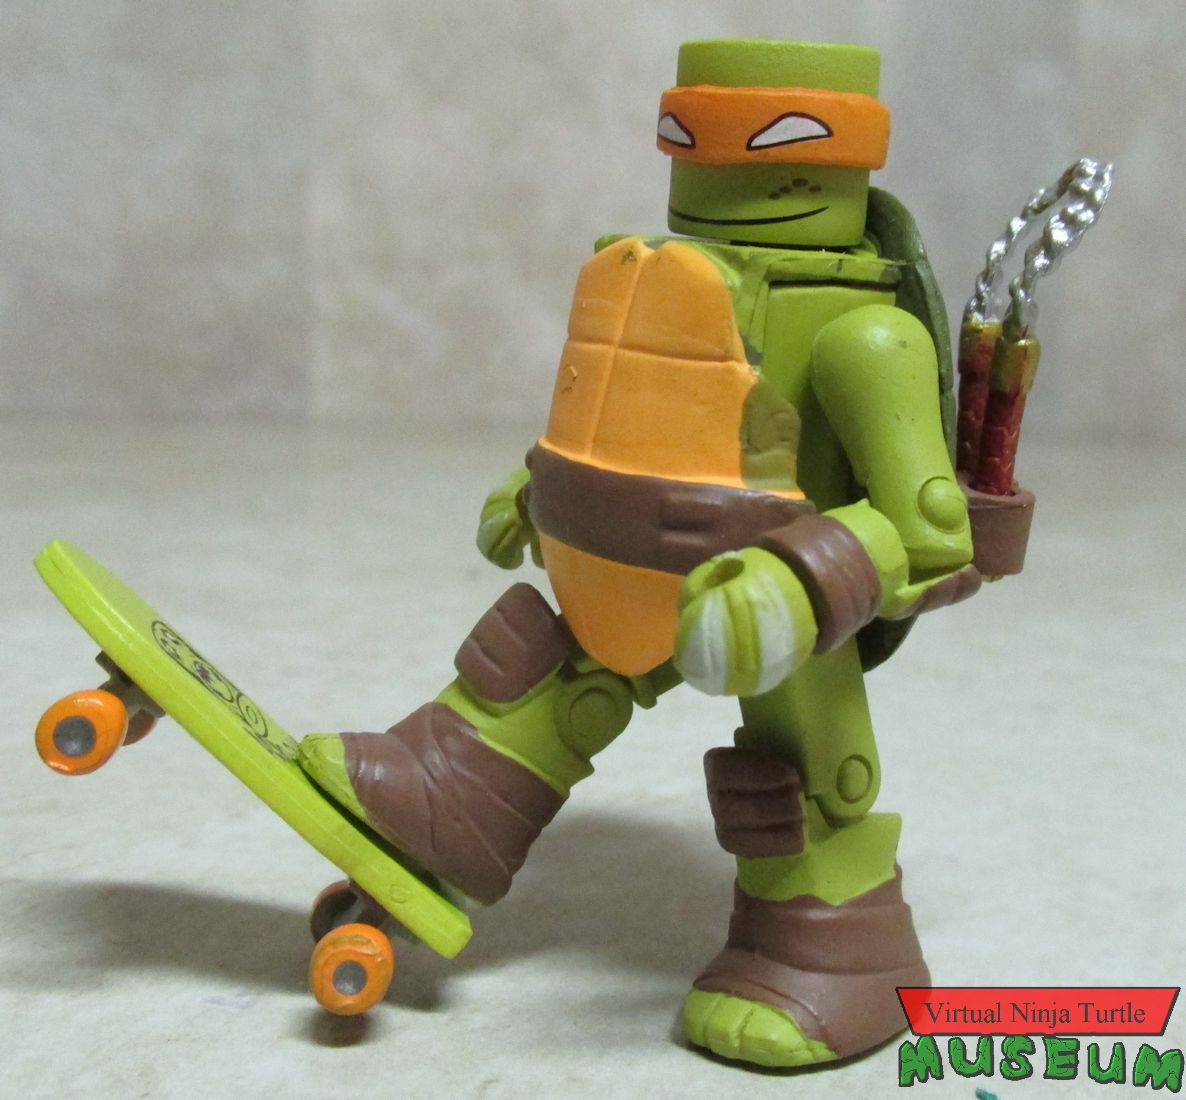 Michelangelo with skateboard